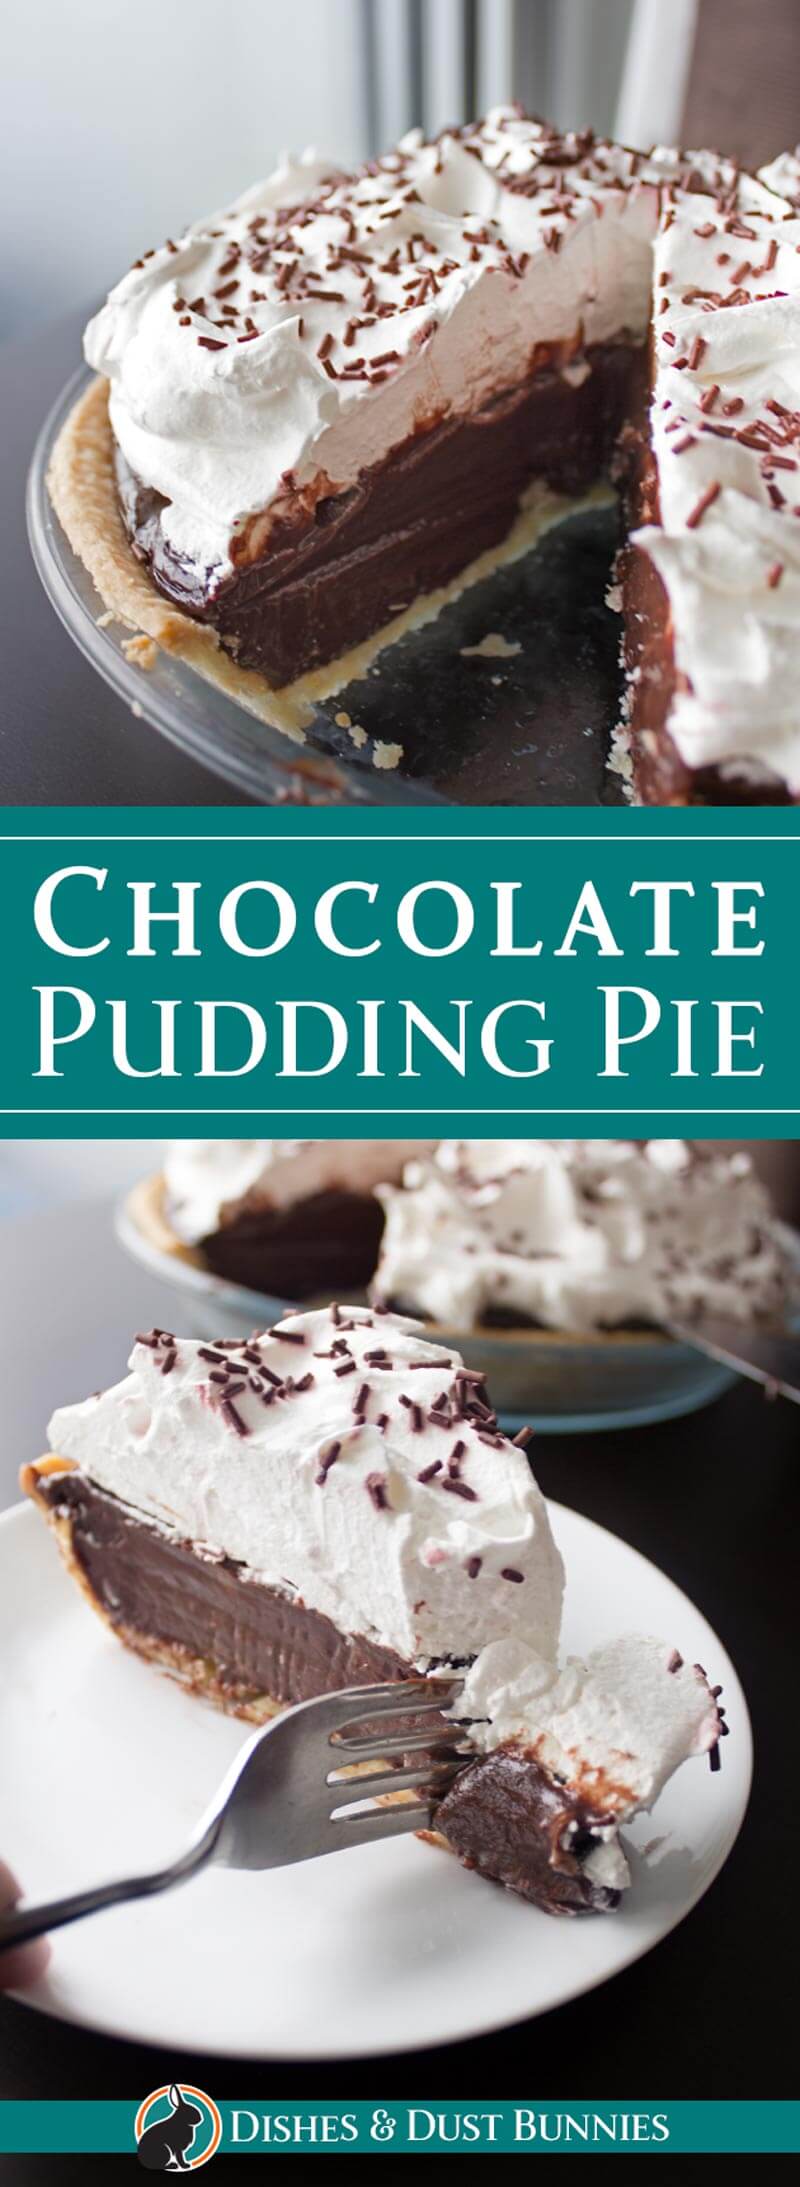 Chocolate Pudding Pie from dishesanddustbunnies,com